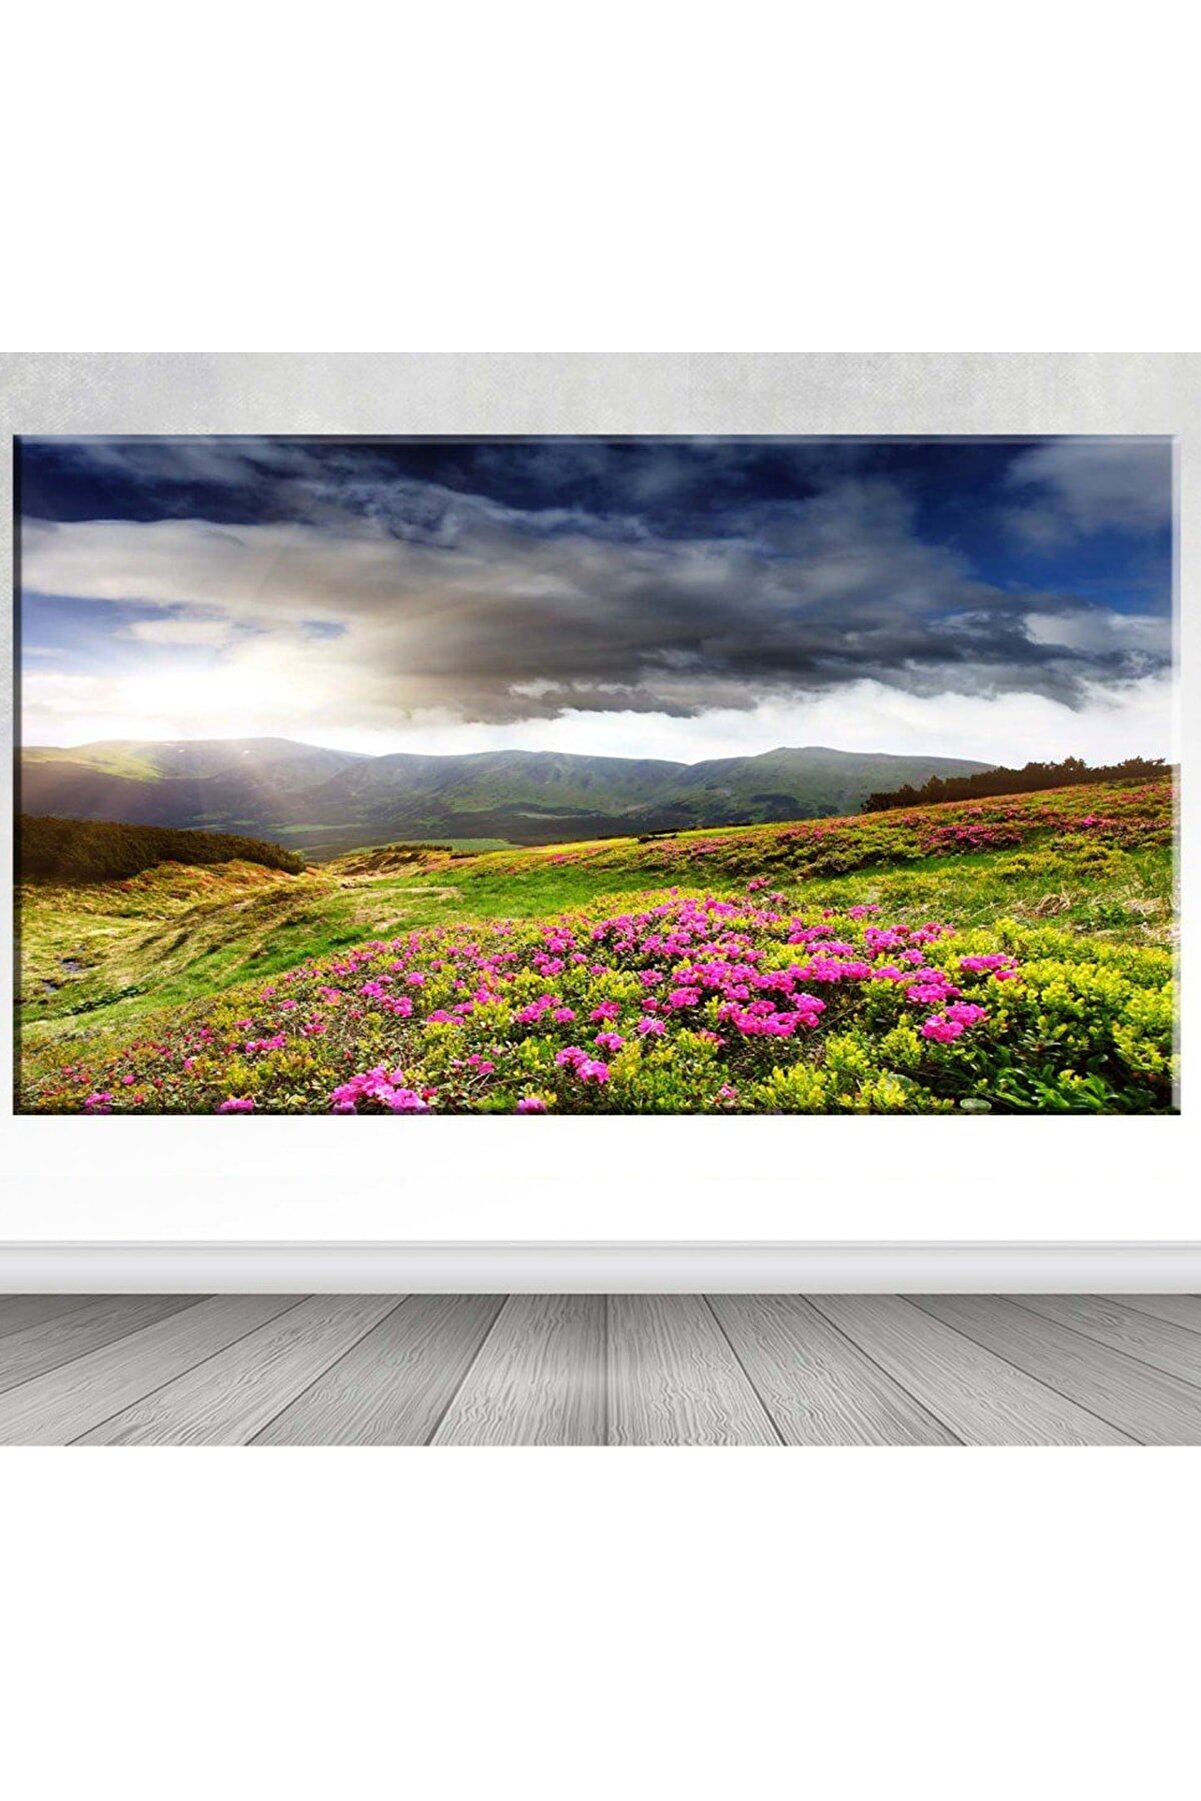 Shop365 Dev Boyut Pembe Çiçek Manzara Kanvas Tablo -100x140 cm